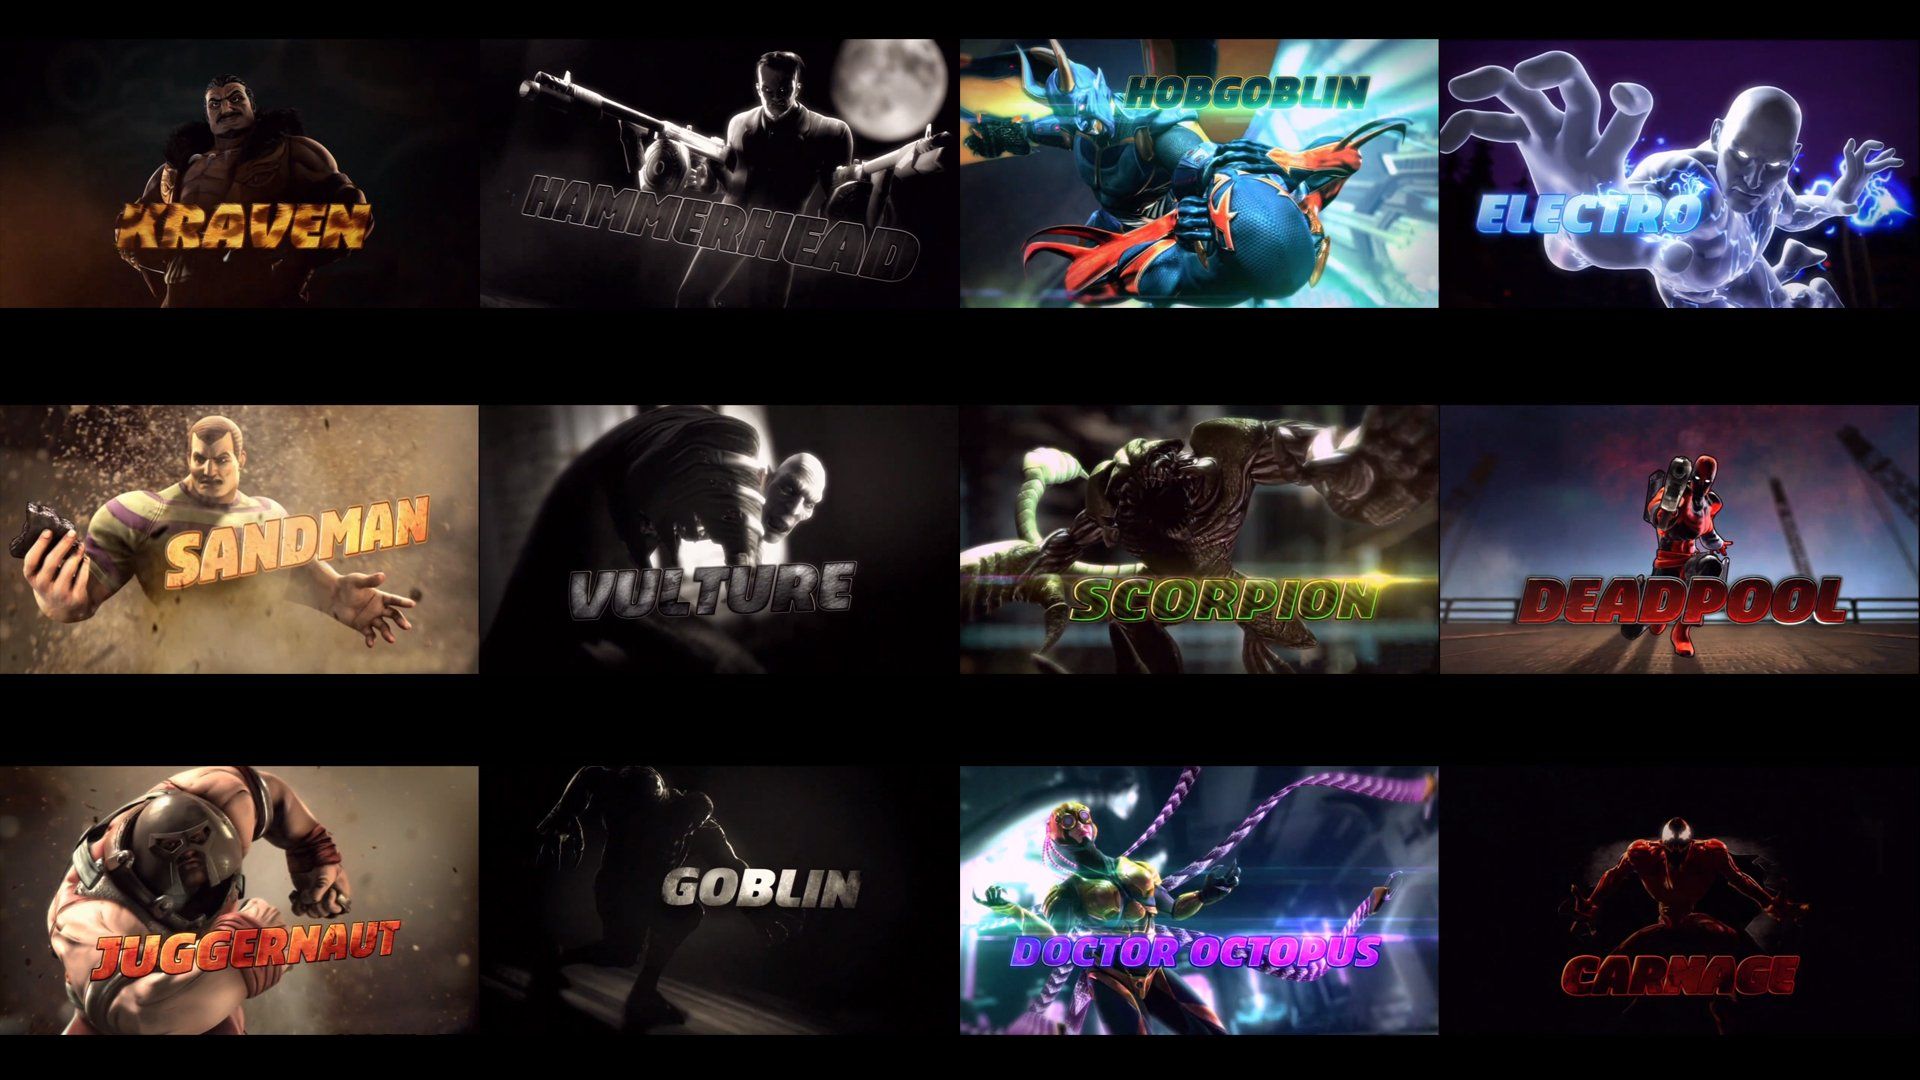 spider man, Shattered, Dimensions, Action, Adventure, Superhero, Platform, Stealth, Spiderman, Spider, Fighting Wallpaper HD / Desktop and Mobile Background